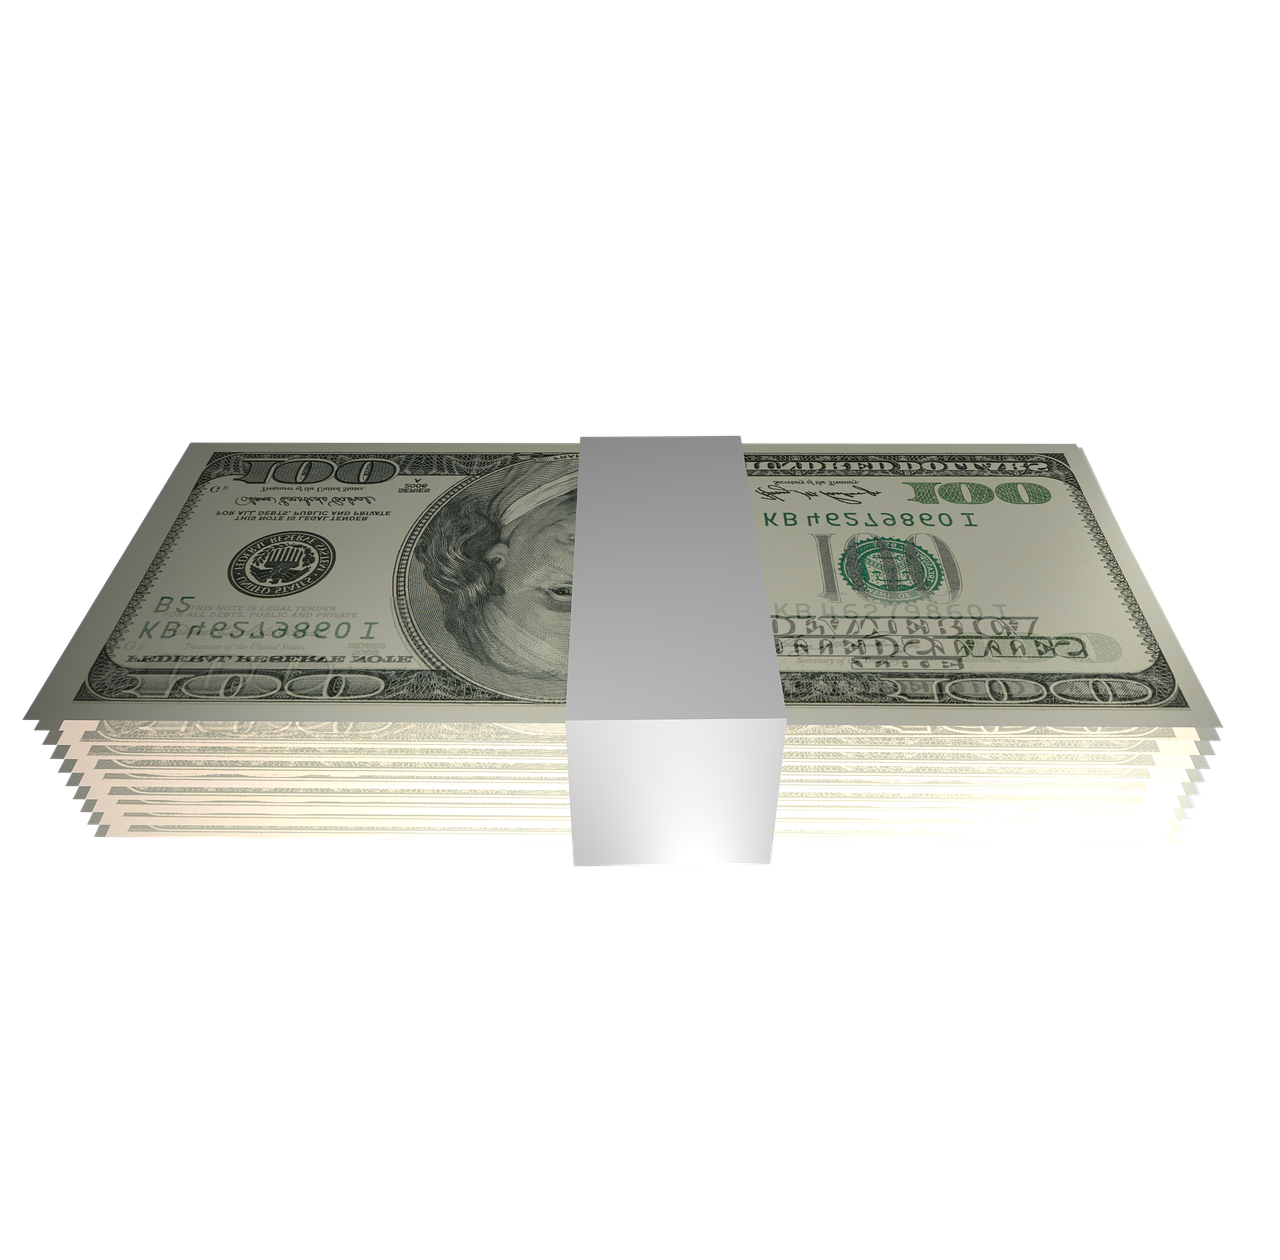 A bundle of $100 bills. 